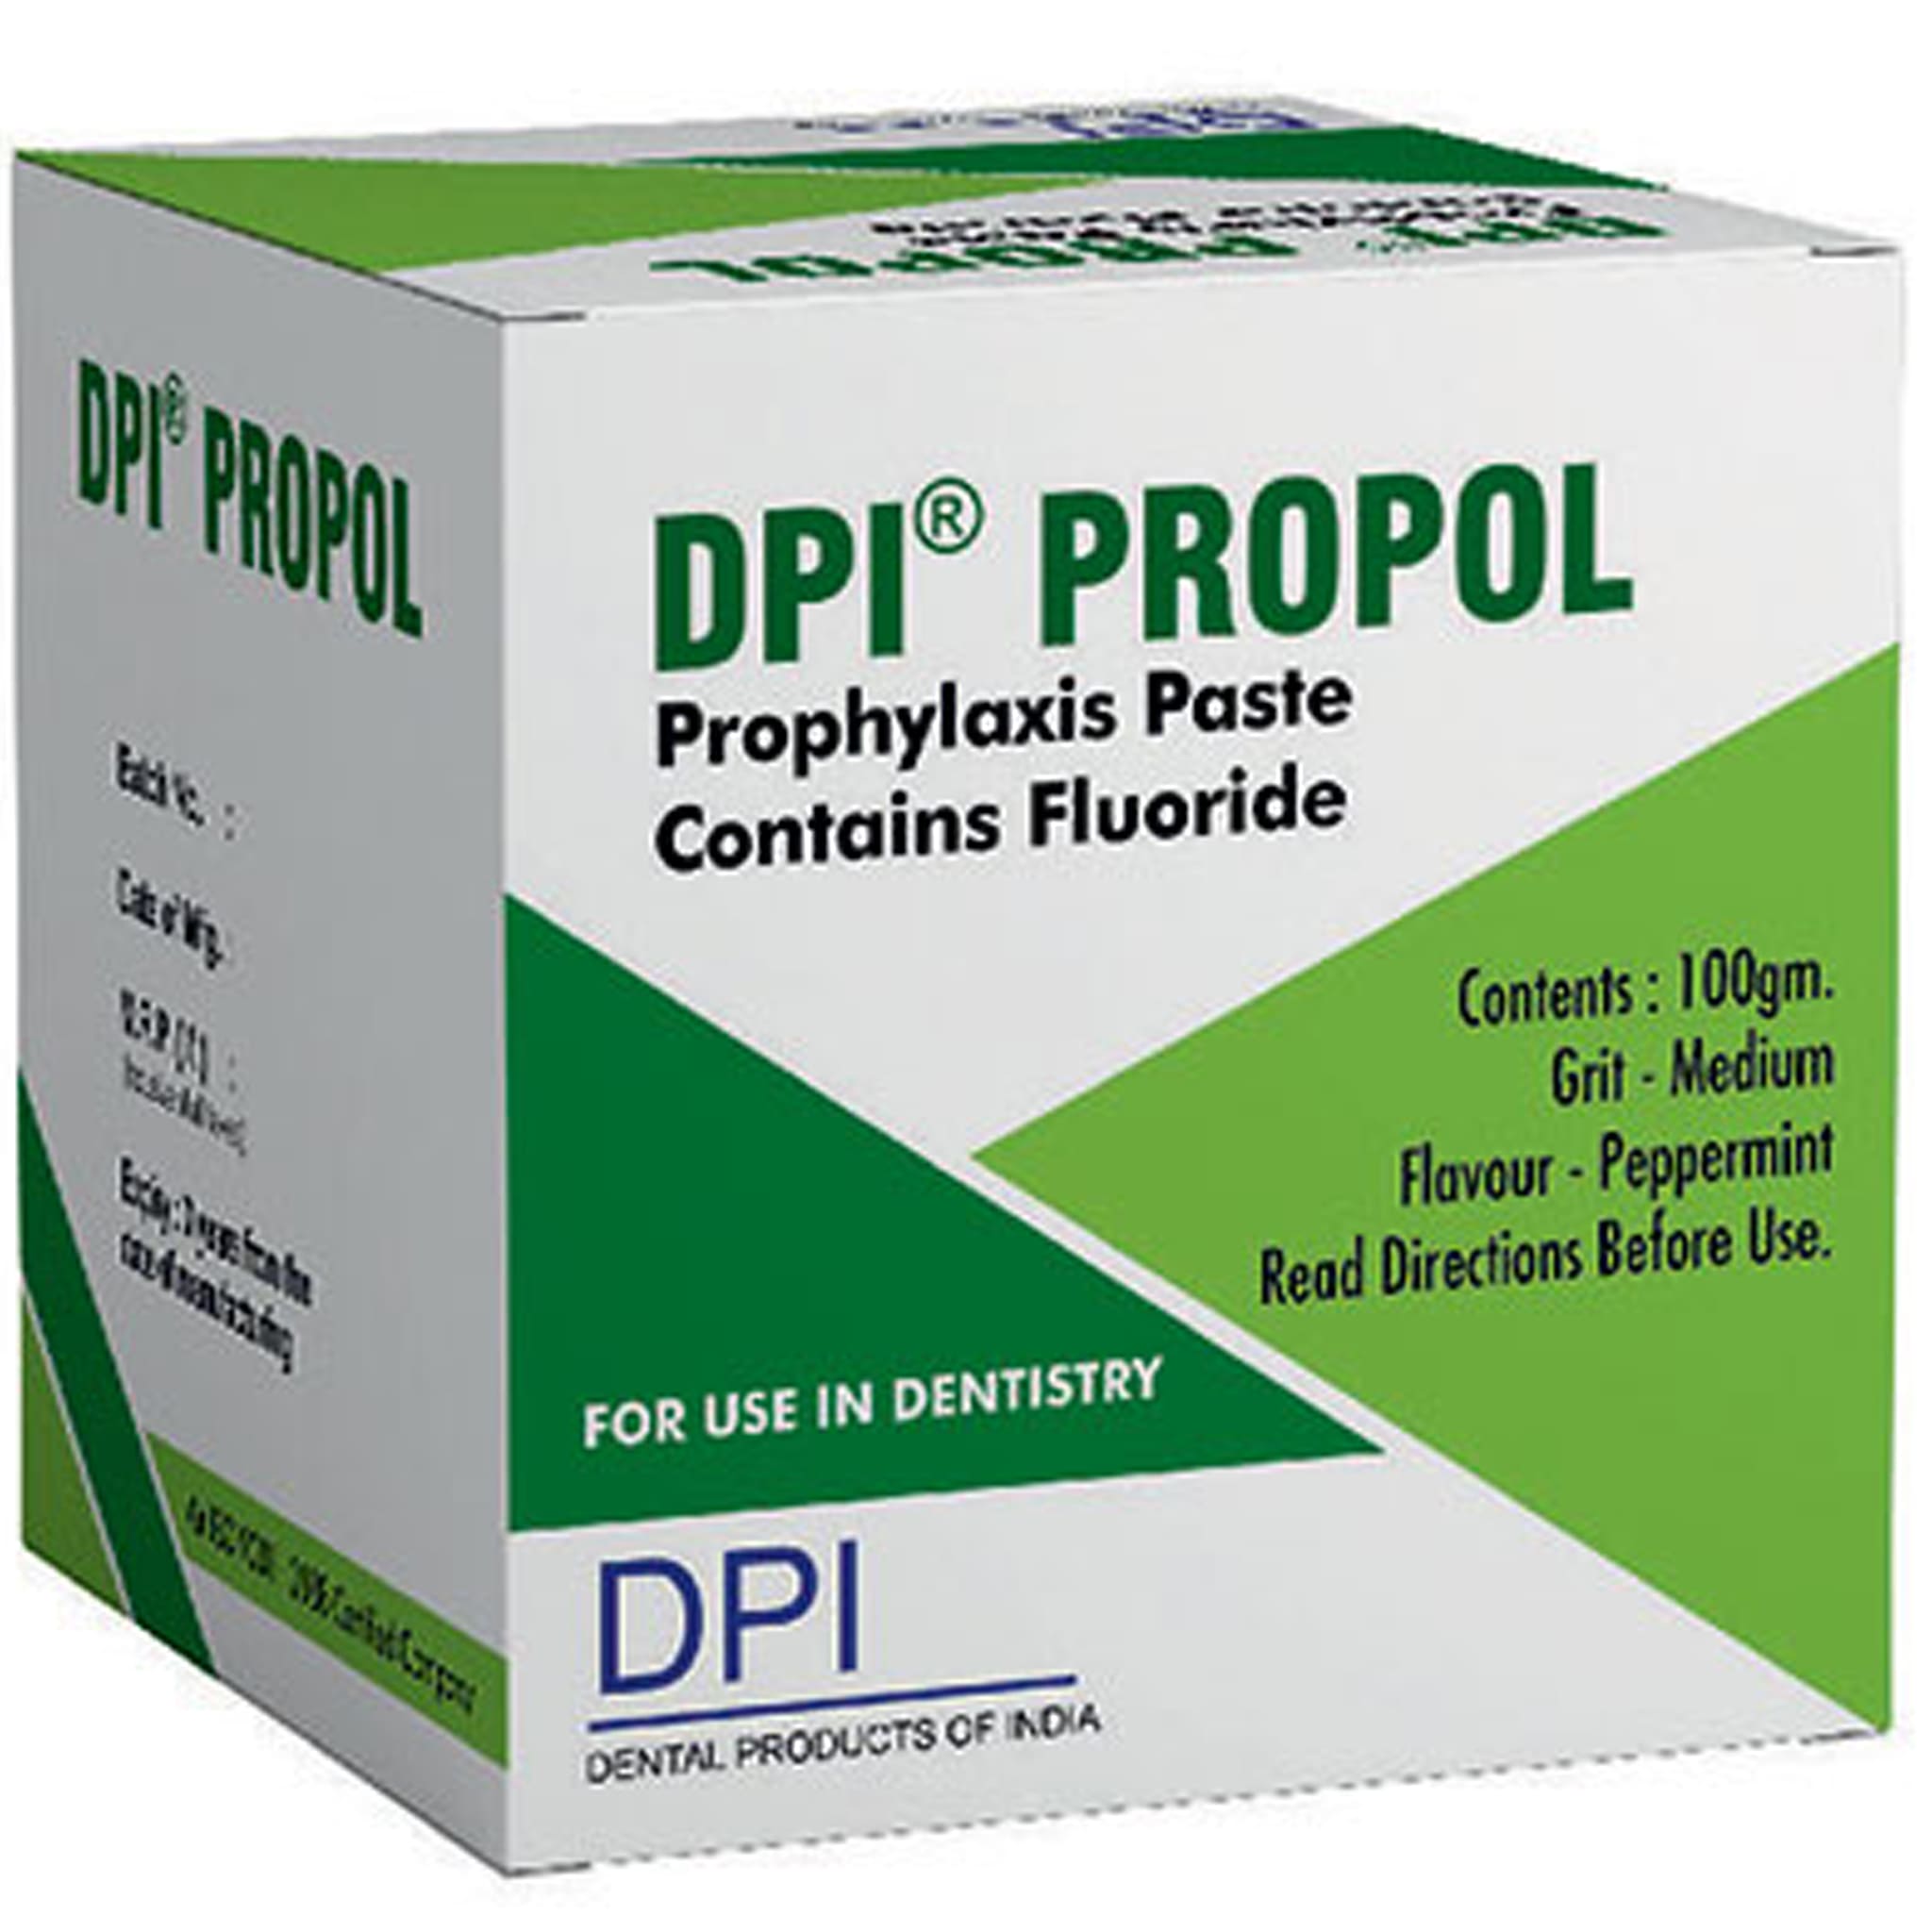 DPI Propol